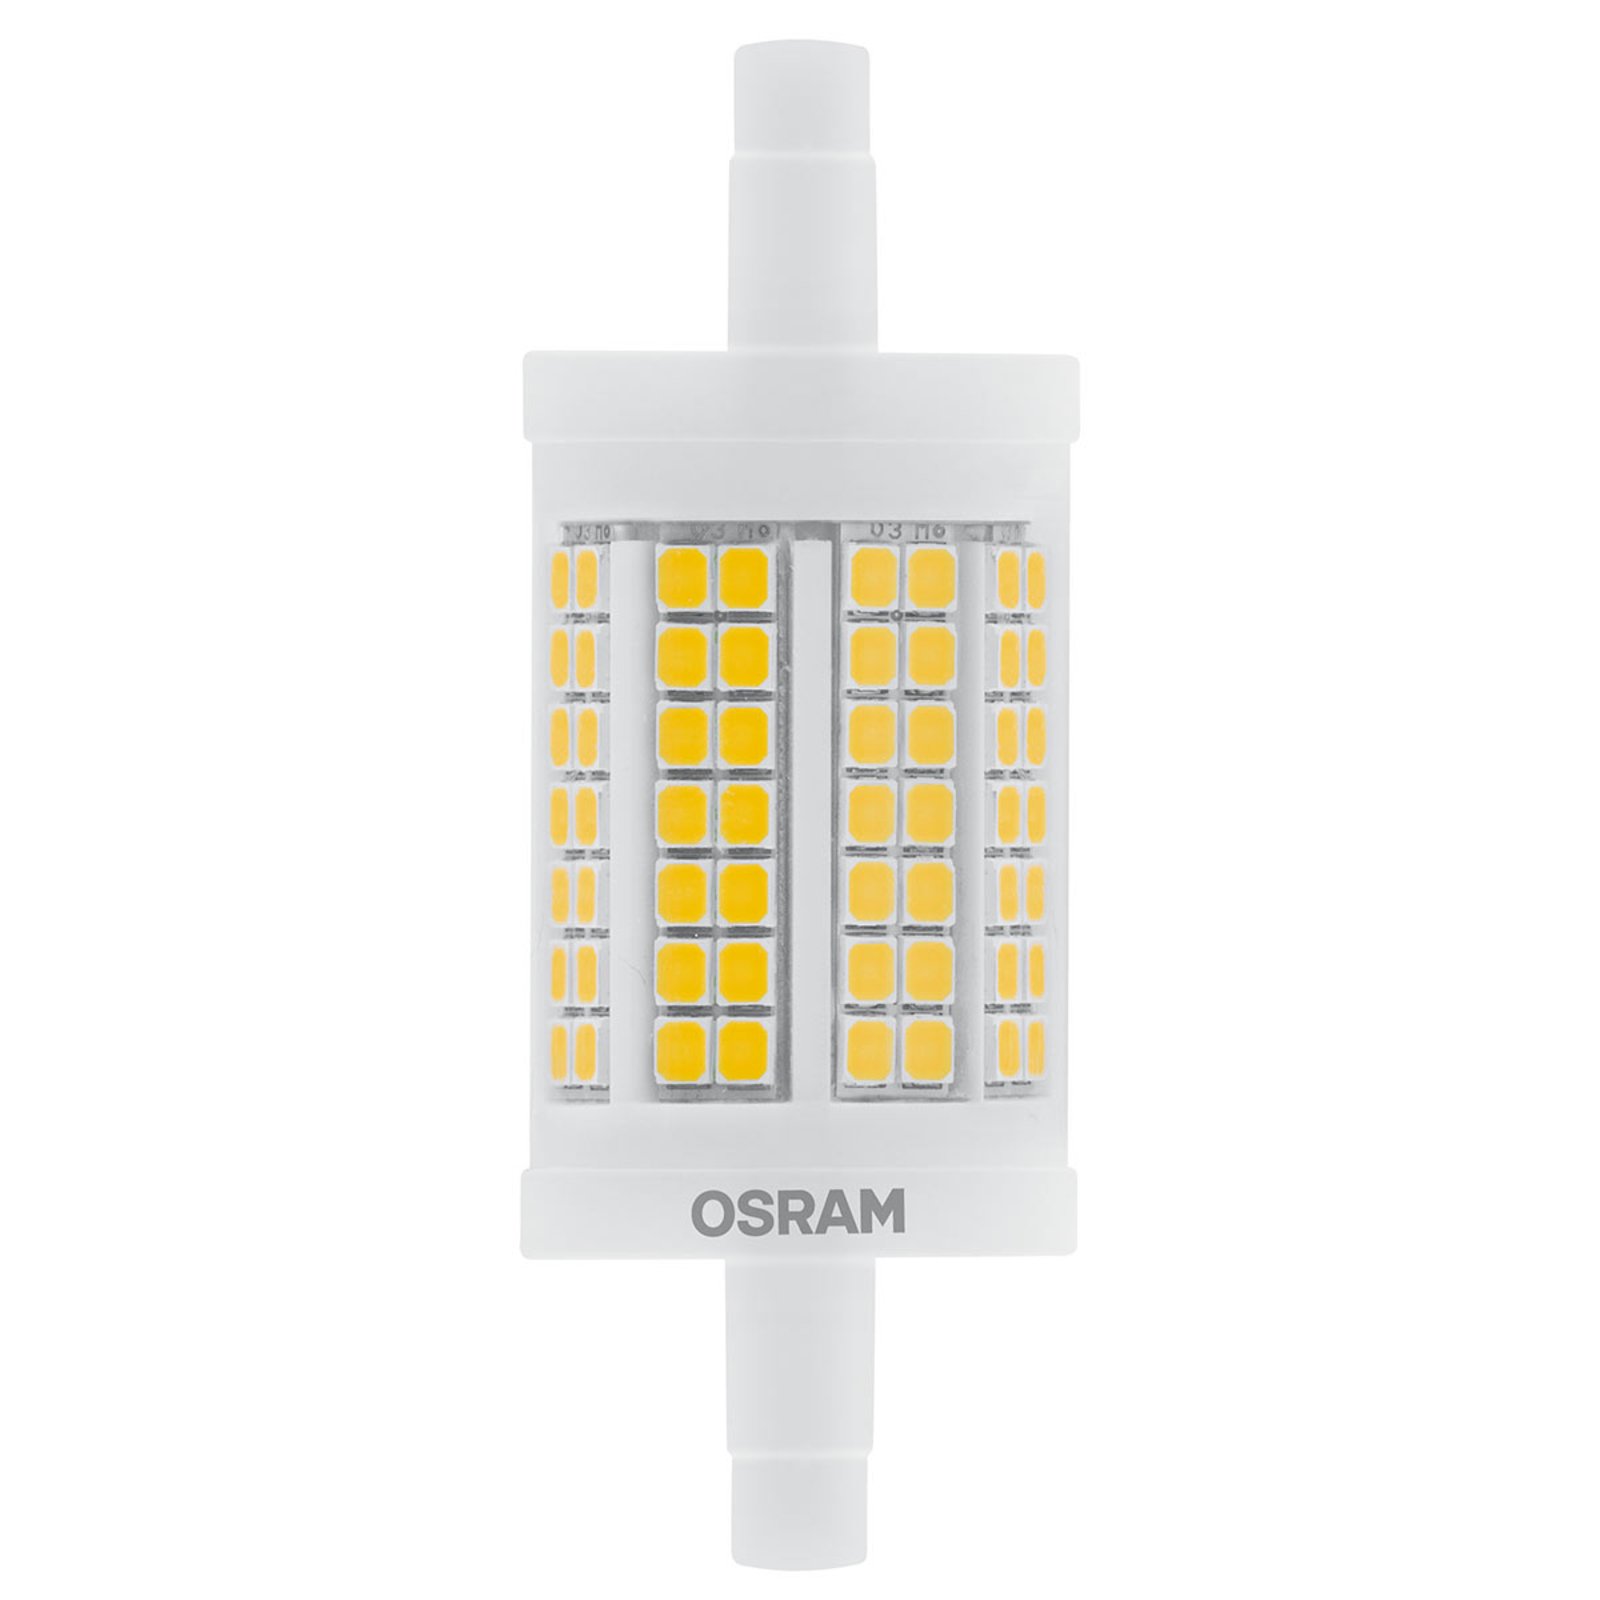 Lâmpada LED OSRAM R7s 12W 7.8cm 827 regulável